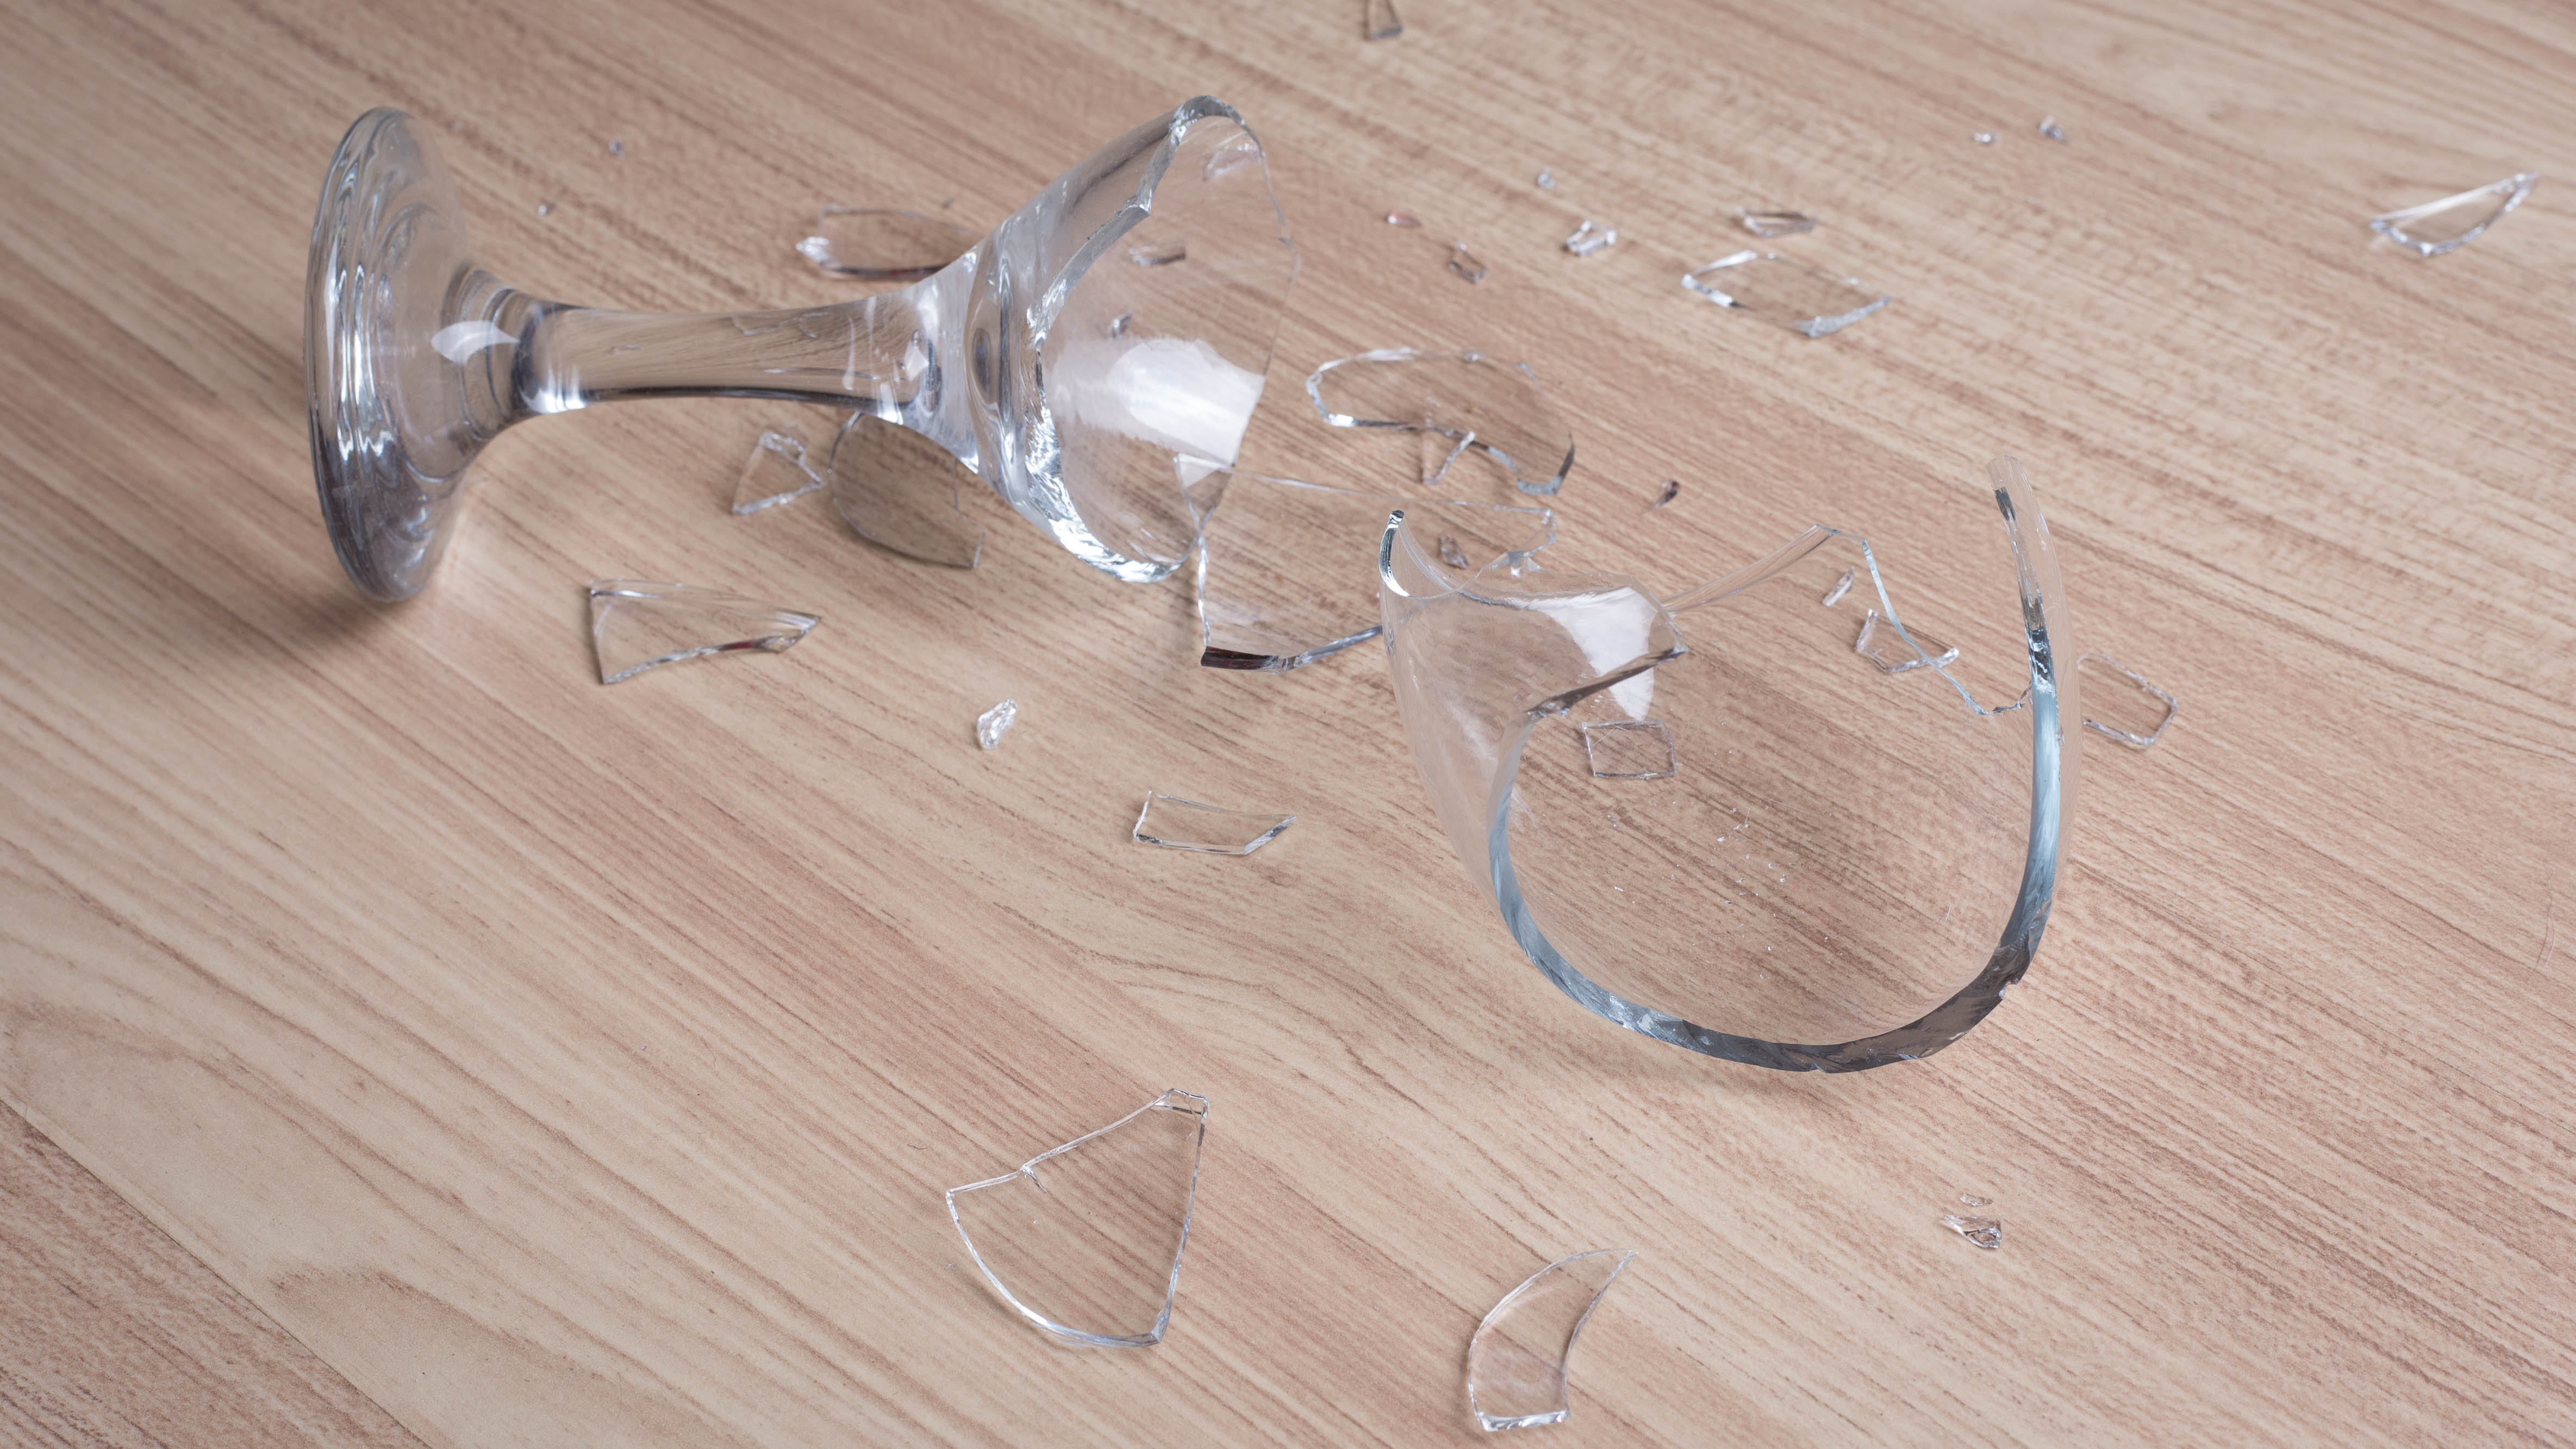 Broken on the floor. Разбитый стакан. Разбитые бокалы. Разбитые бокалы на полу.